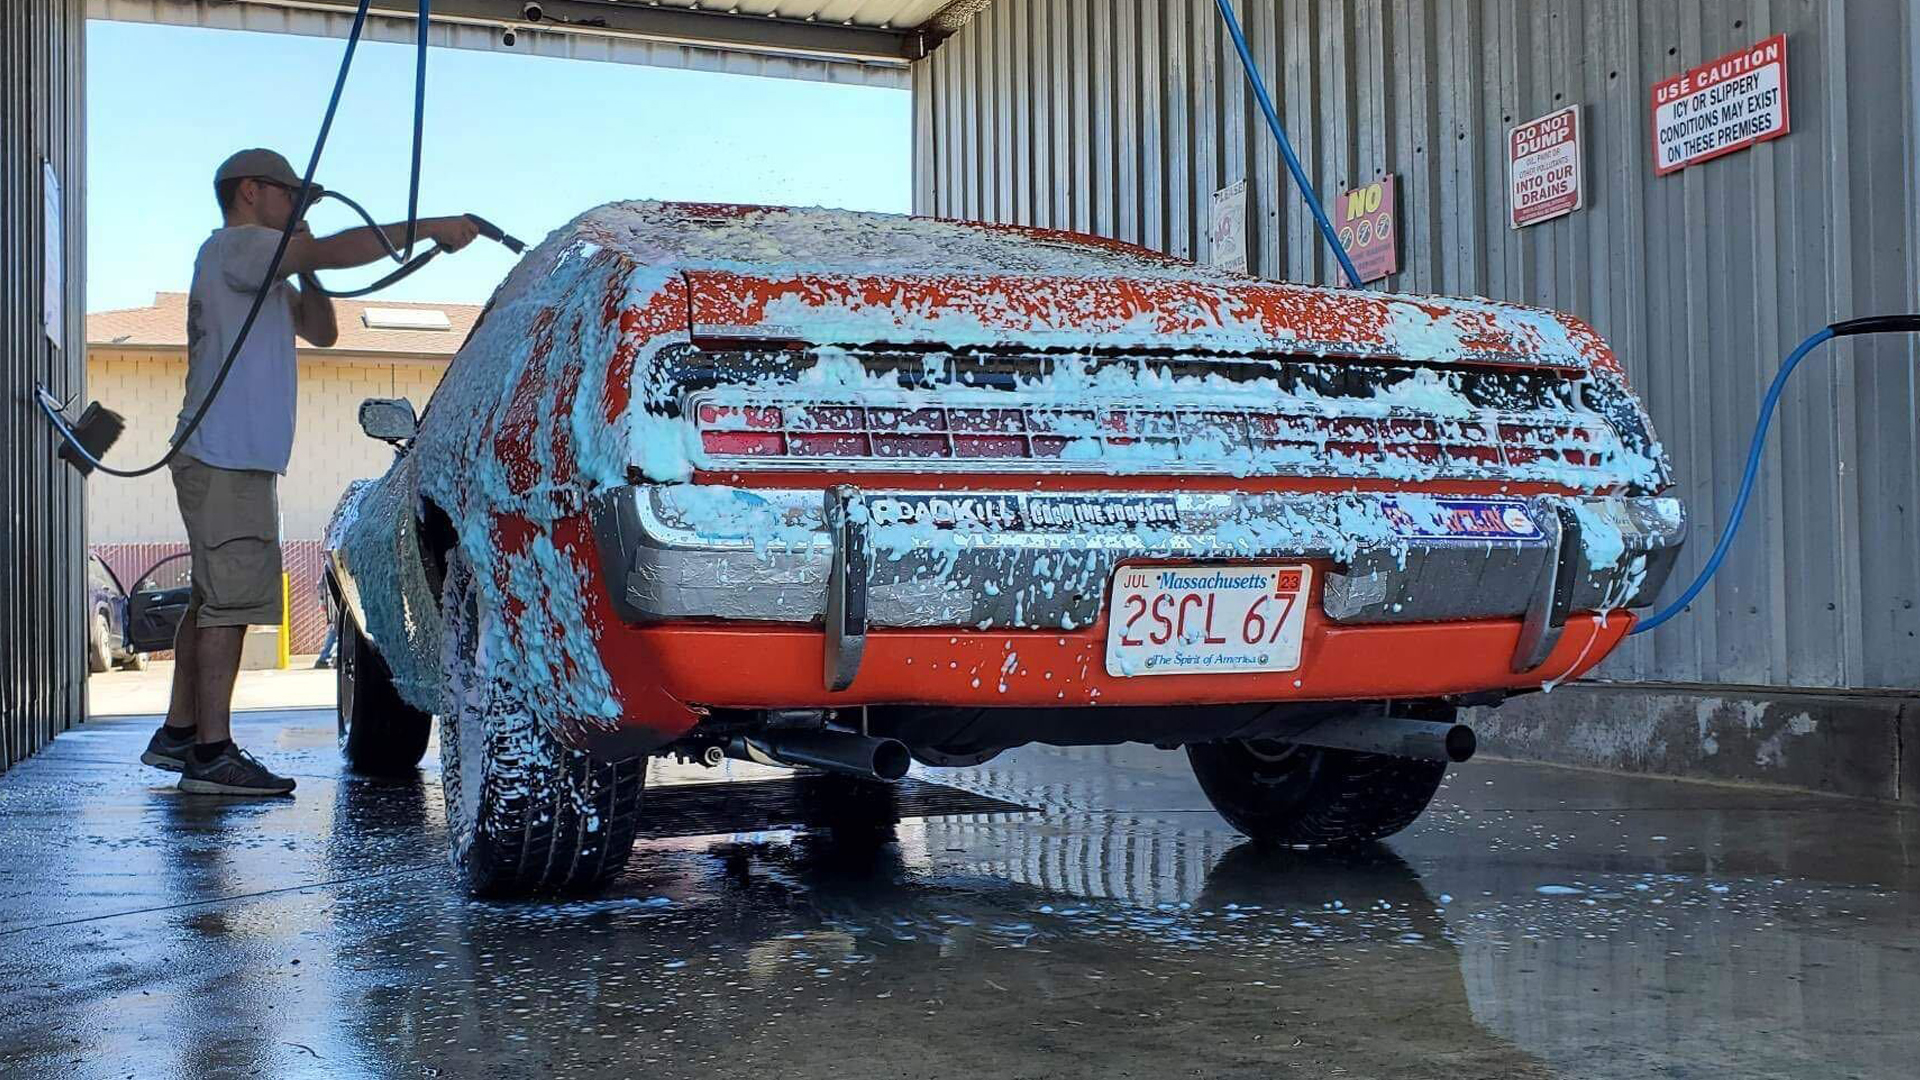 Best Car Wash Soap For Snow Foam Cannon, Foam Gun, Car Soap Wash For  Pressure - Buy Best Car Wash Soap For Snow Foam Cannon, Foam Gun, Car Soap  Wash For Pressure